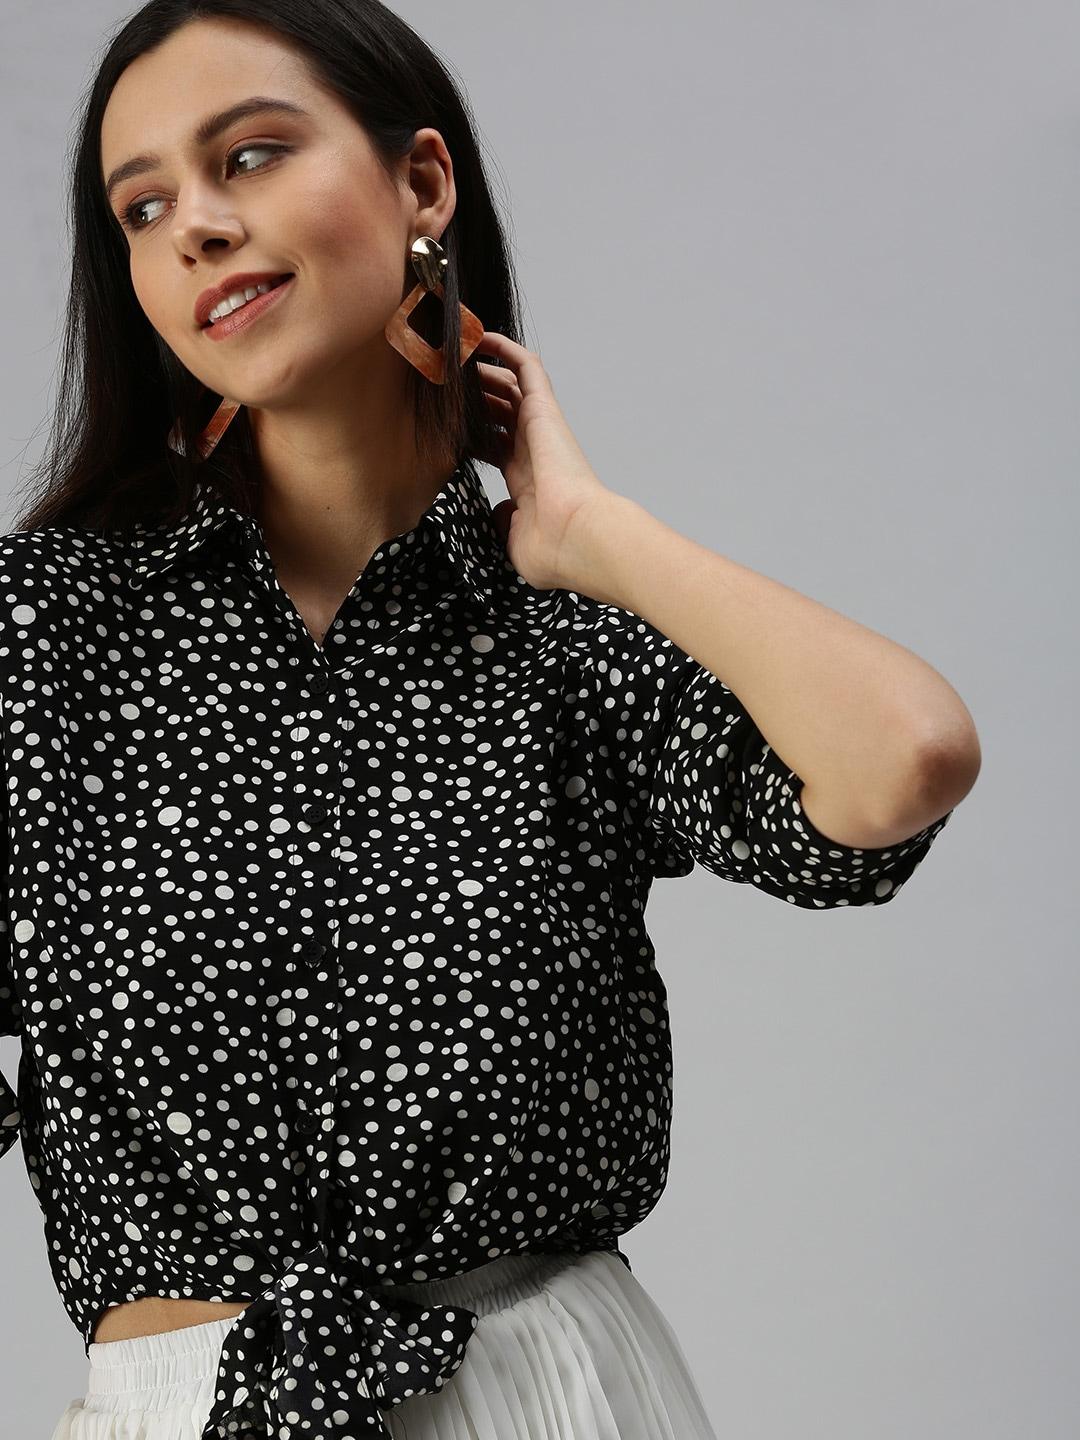 showoff-women-black-micro-ditsy-printed-shirt-style-top